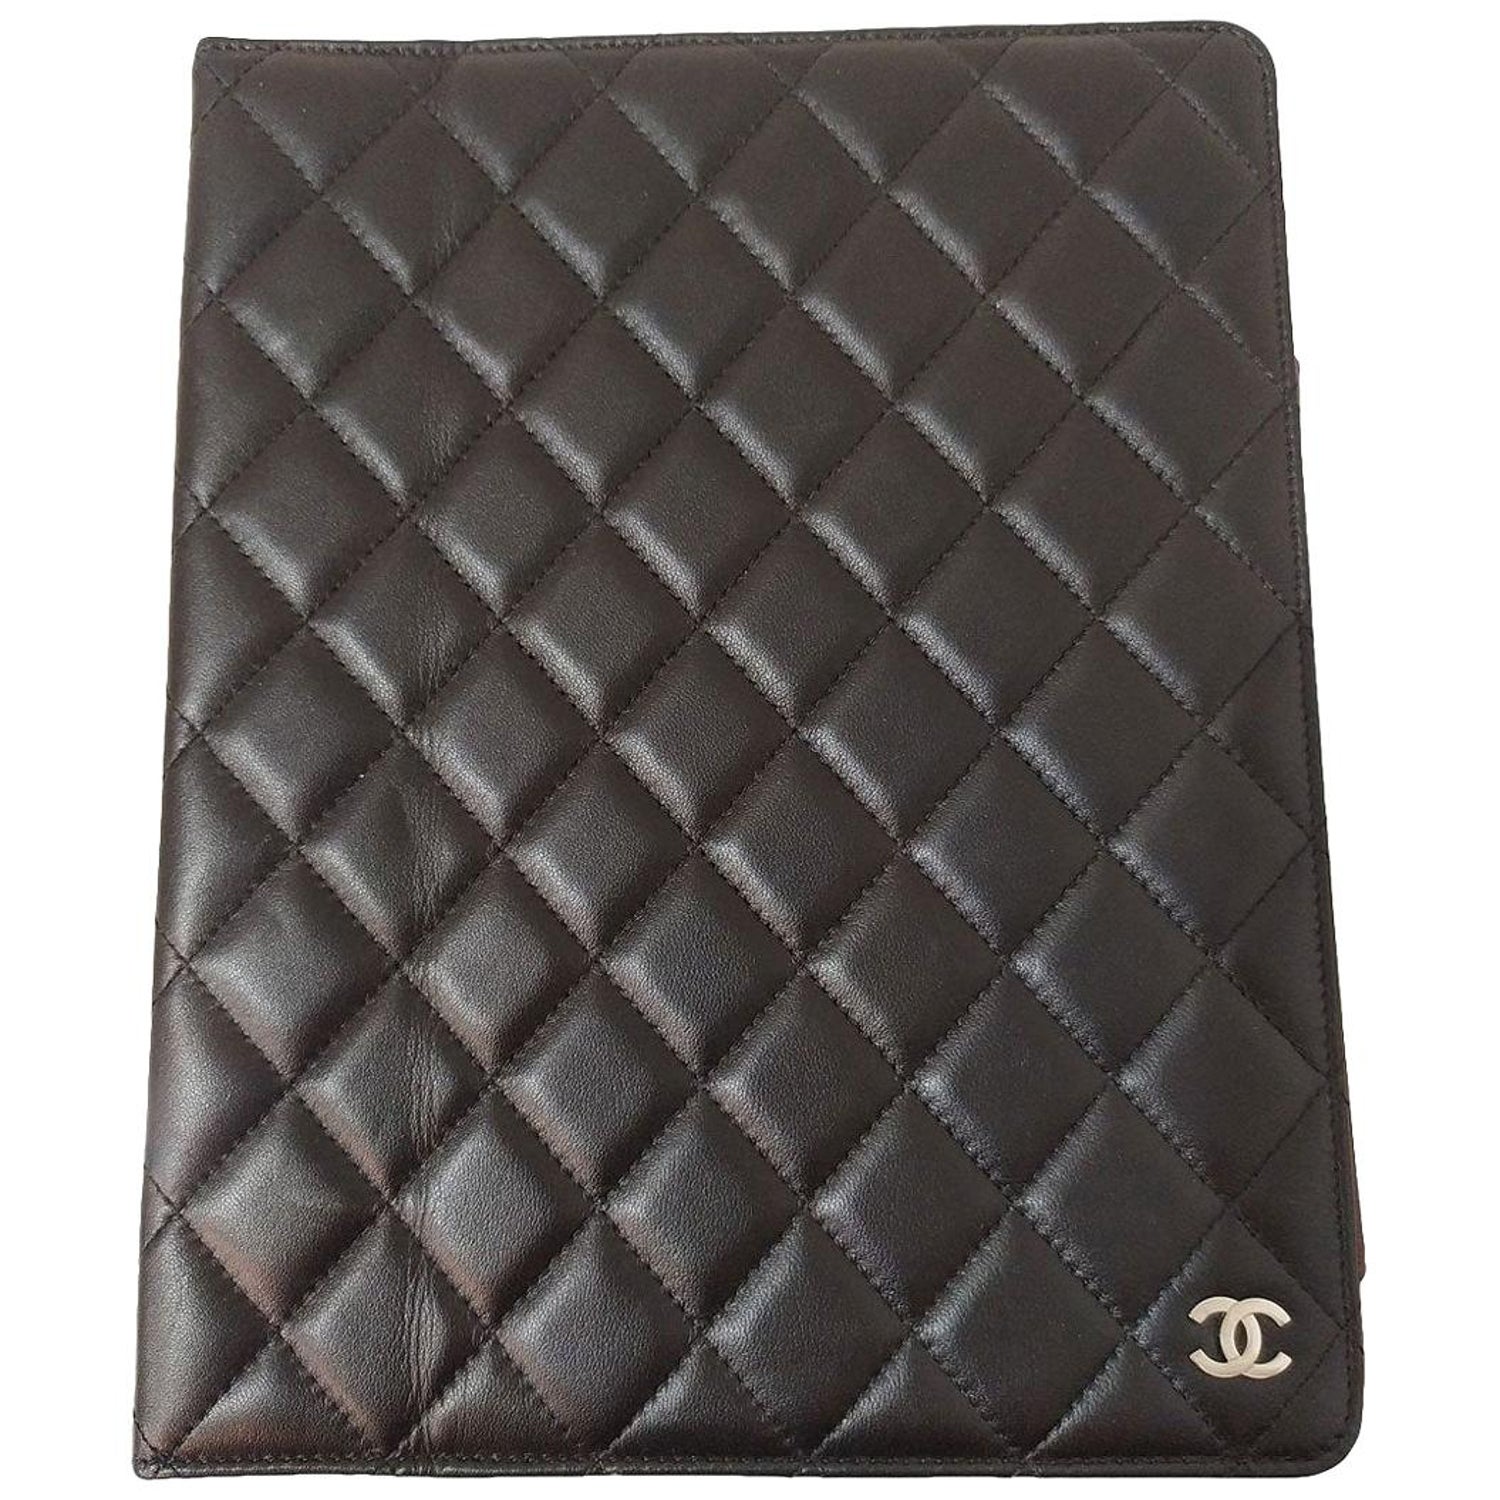 Chanel A65059 Classic CC iPad Burgundy Caviar iPad or iPhone Case SHW